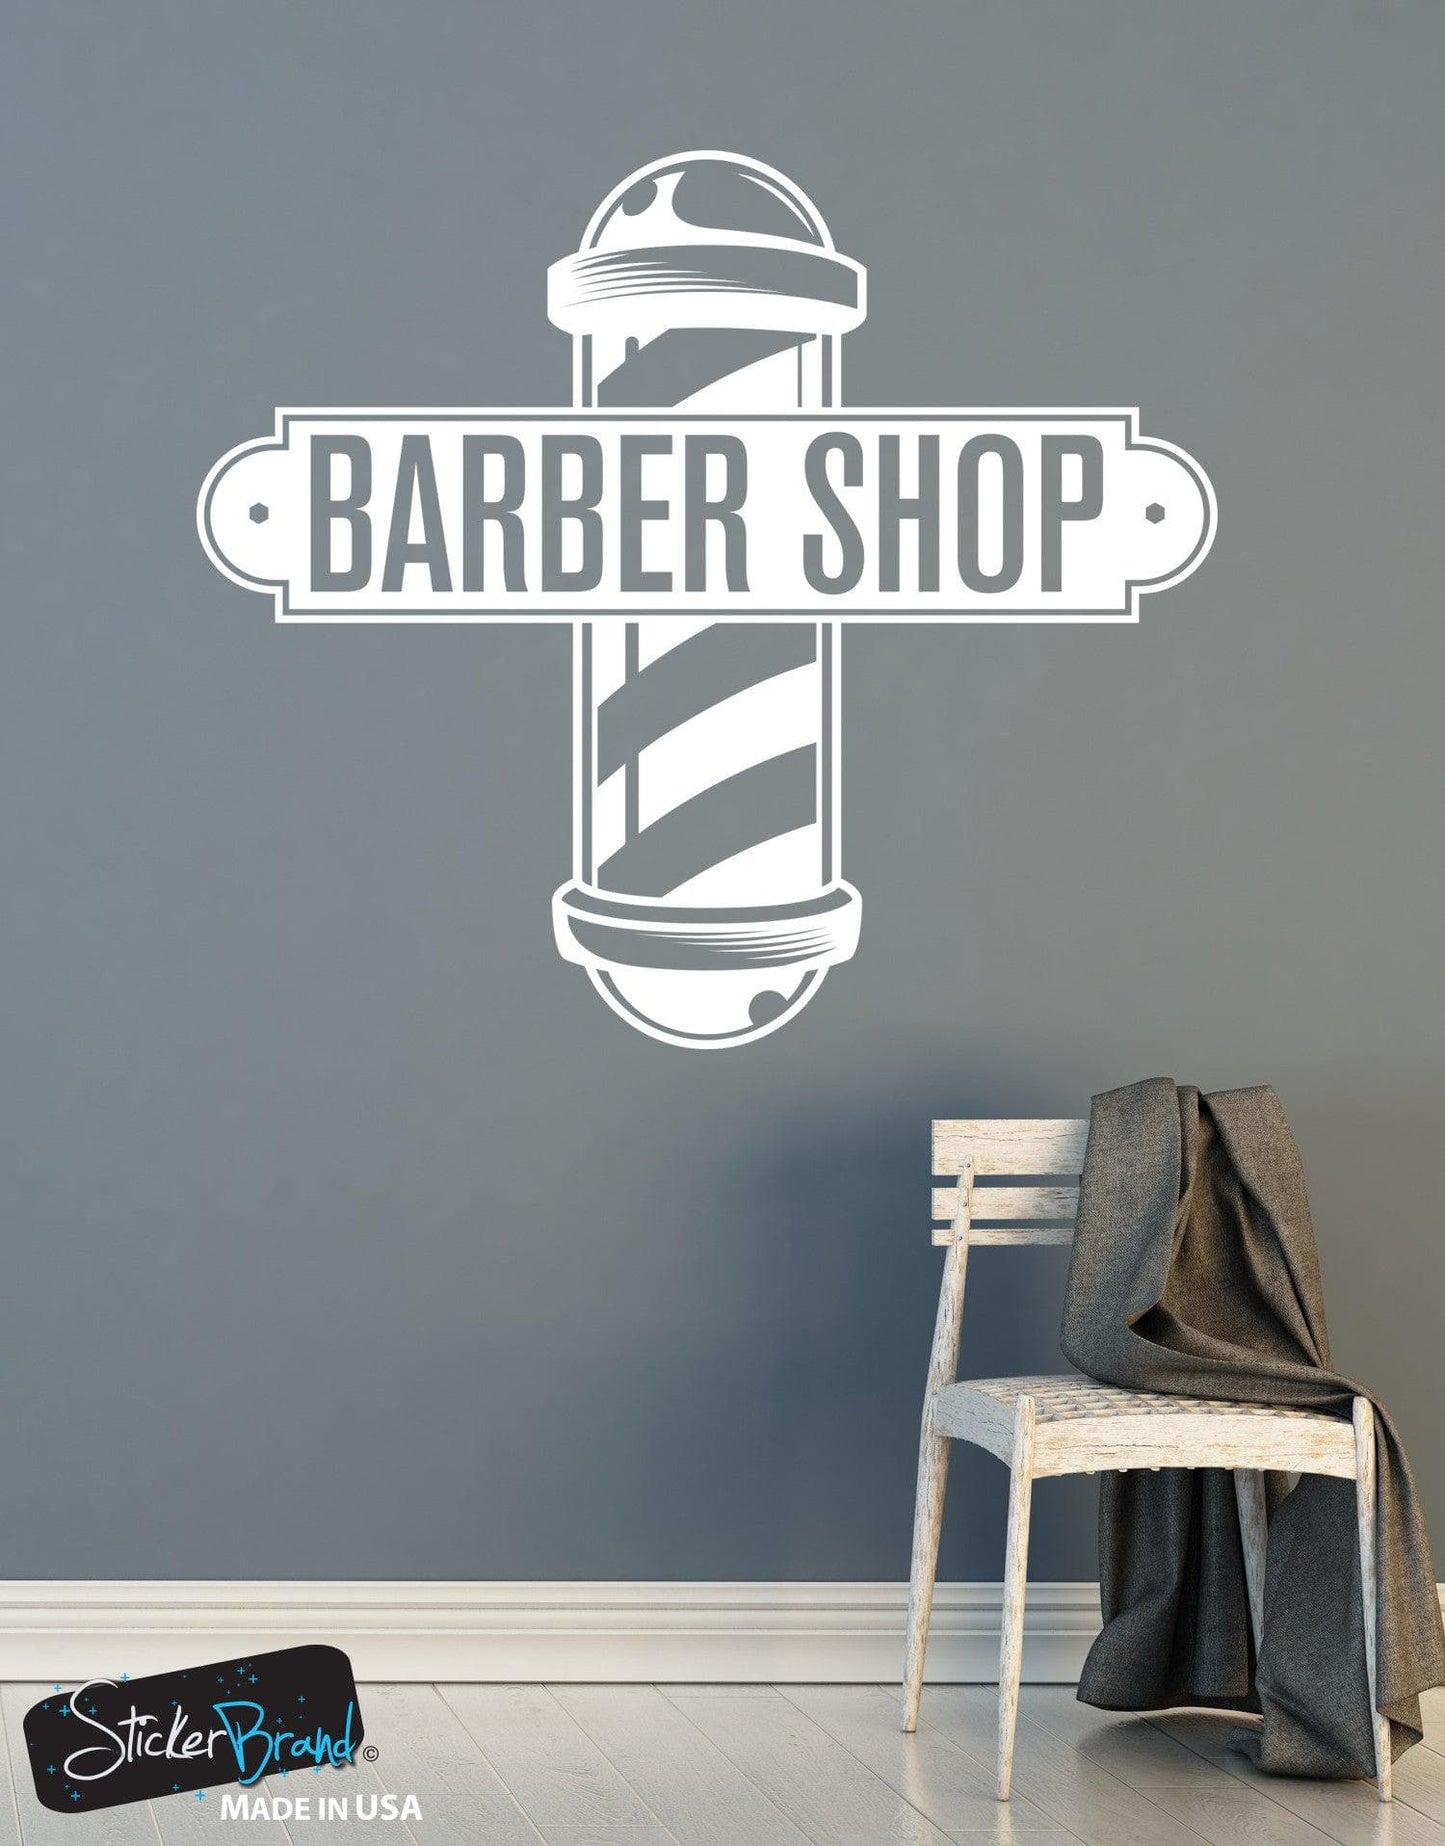 Barbershop Sign Vinyl Wall Decal Sticker #6065